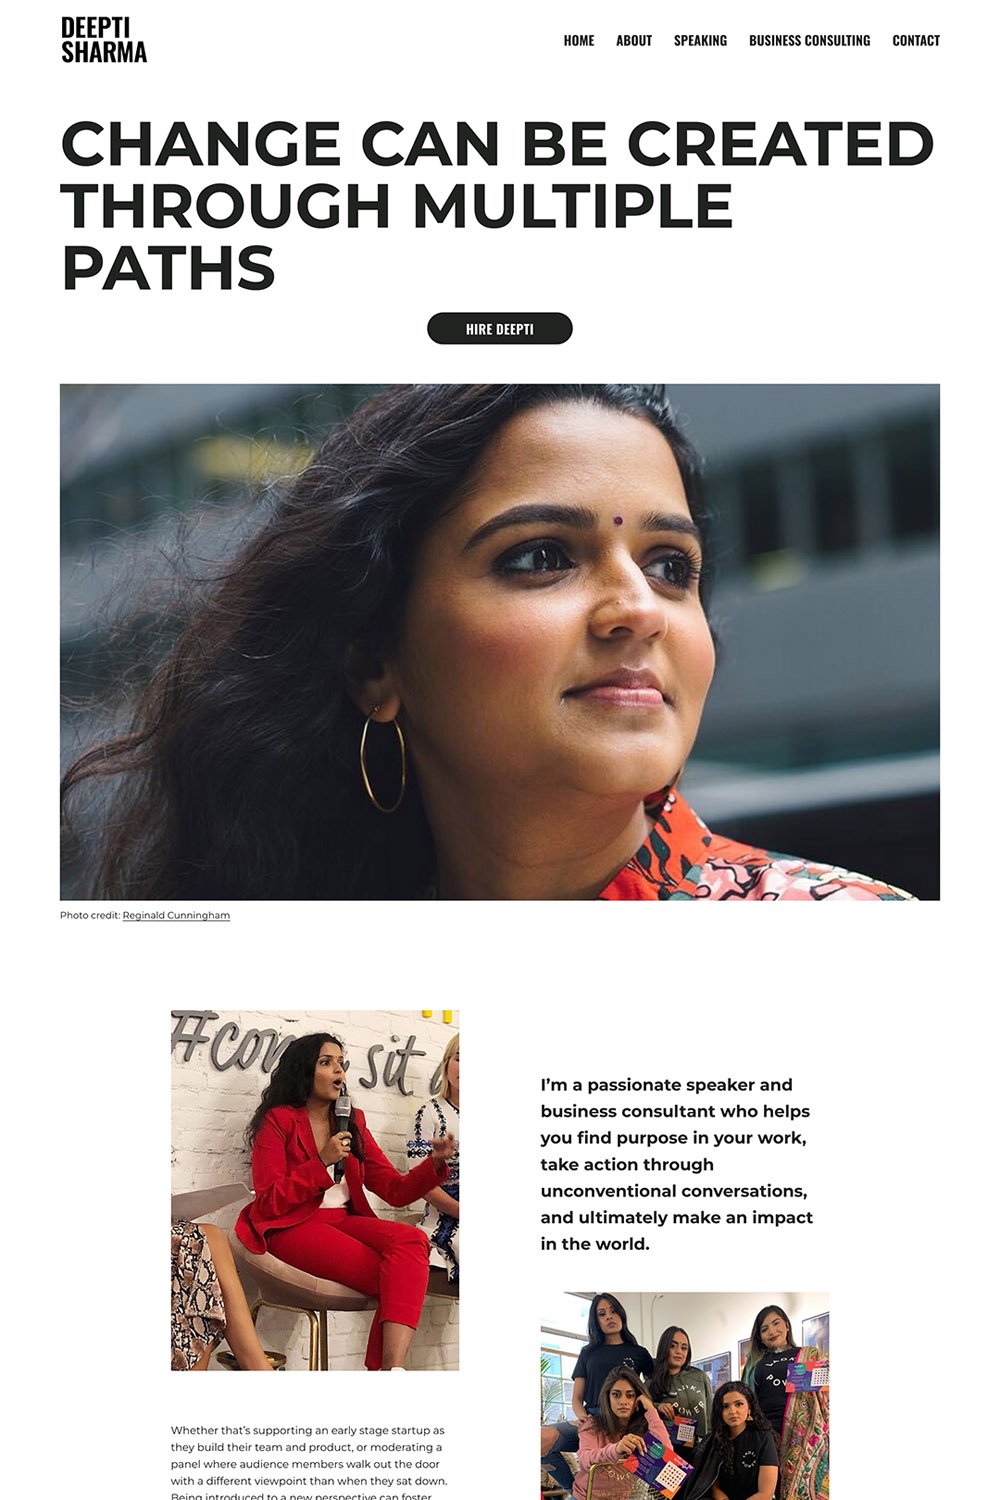 Deepti Sharma's website homepage layout